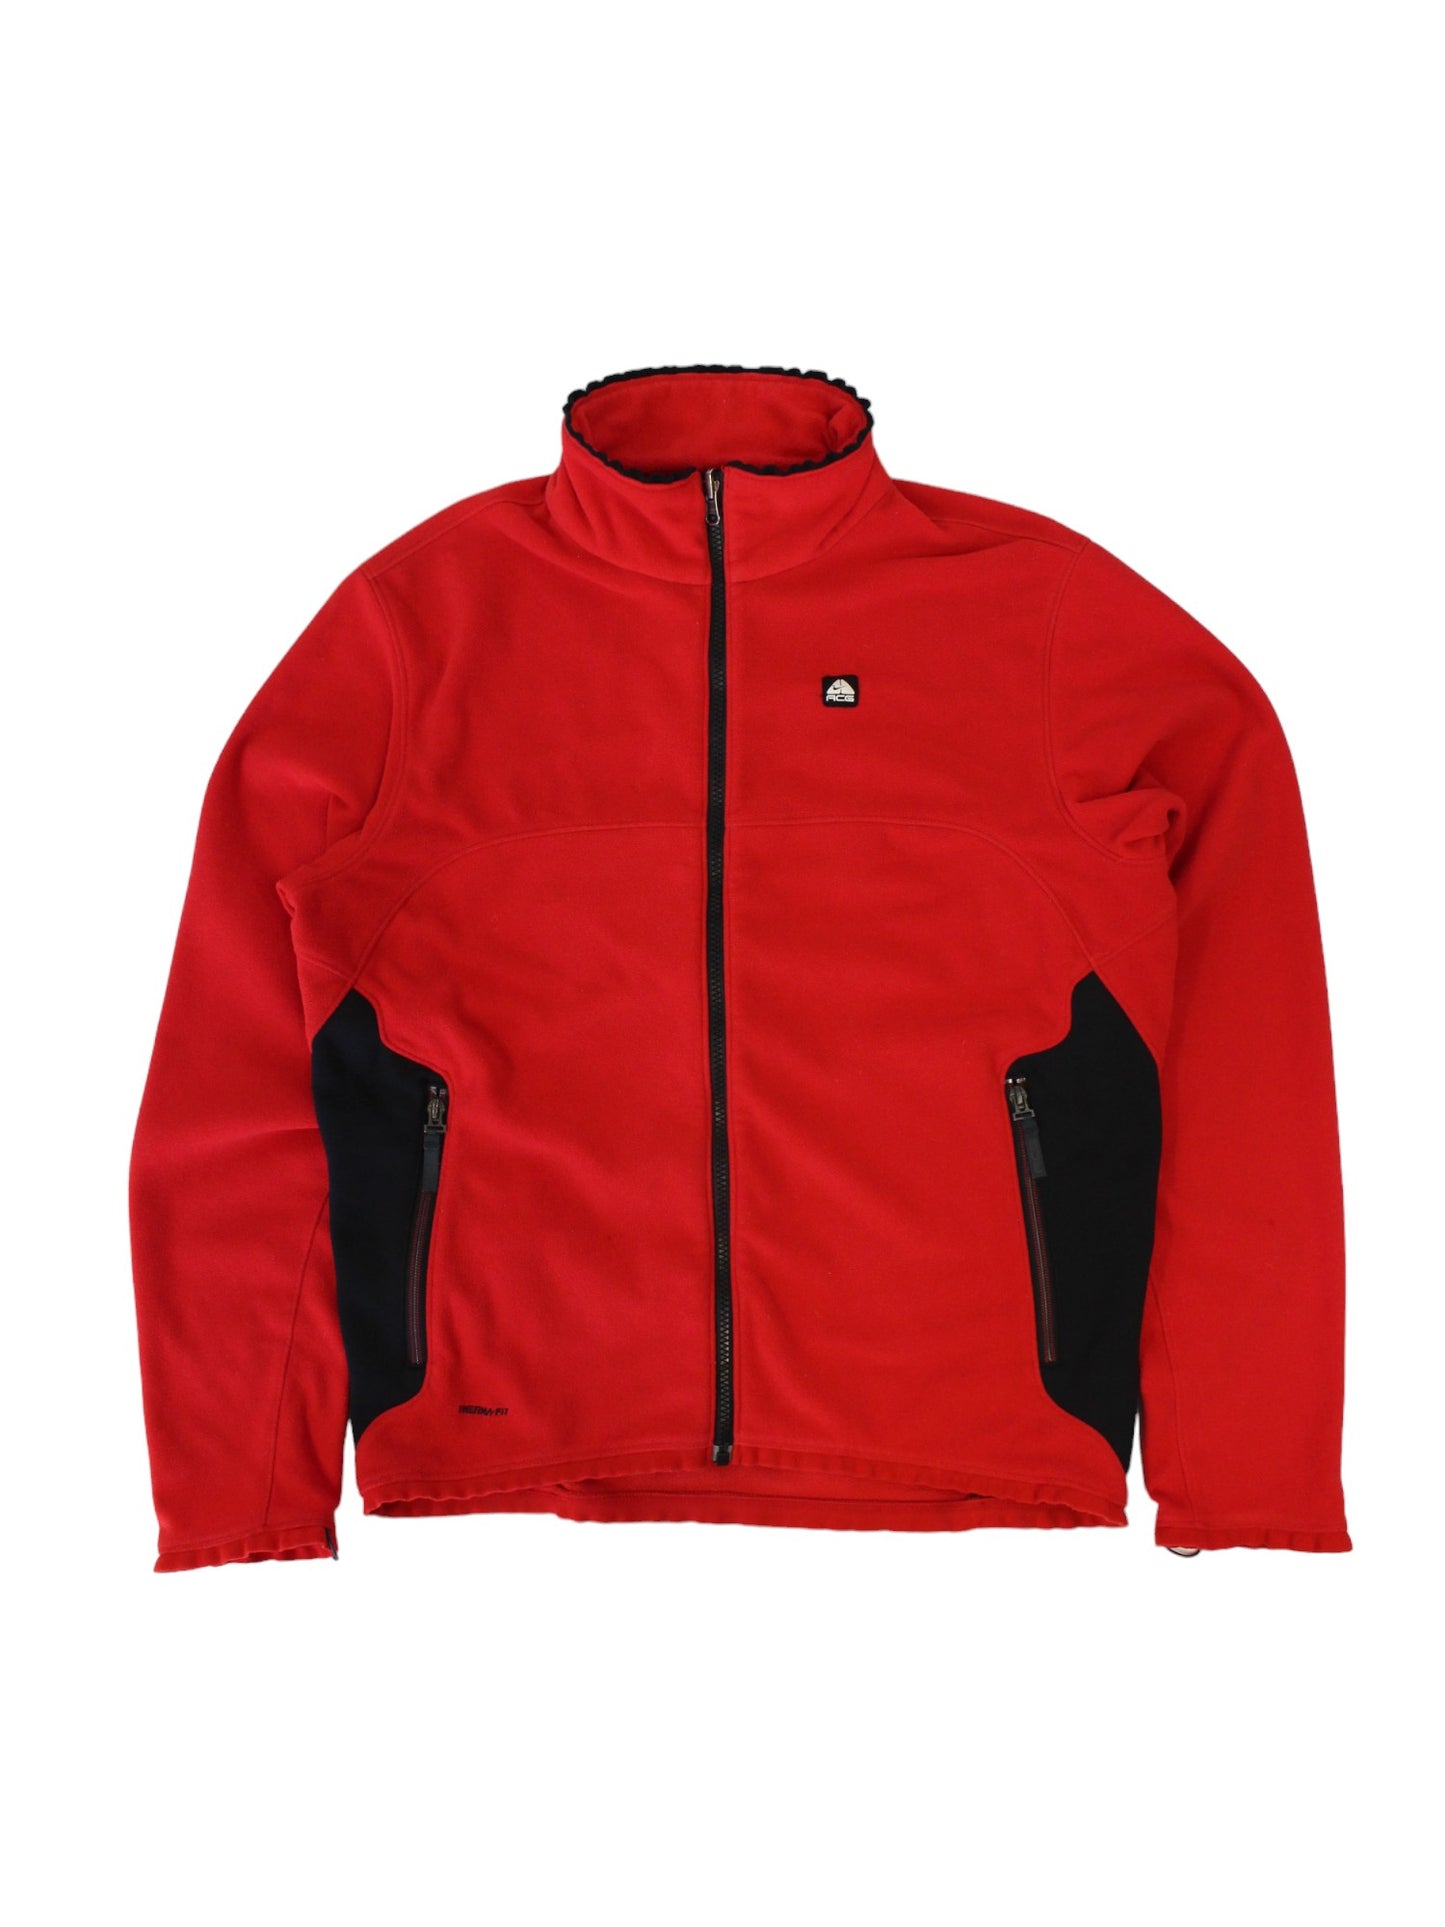 Nike ACG Red Thermafit Fleece Jacket (S)